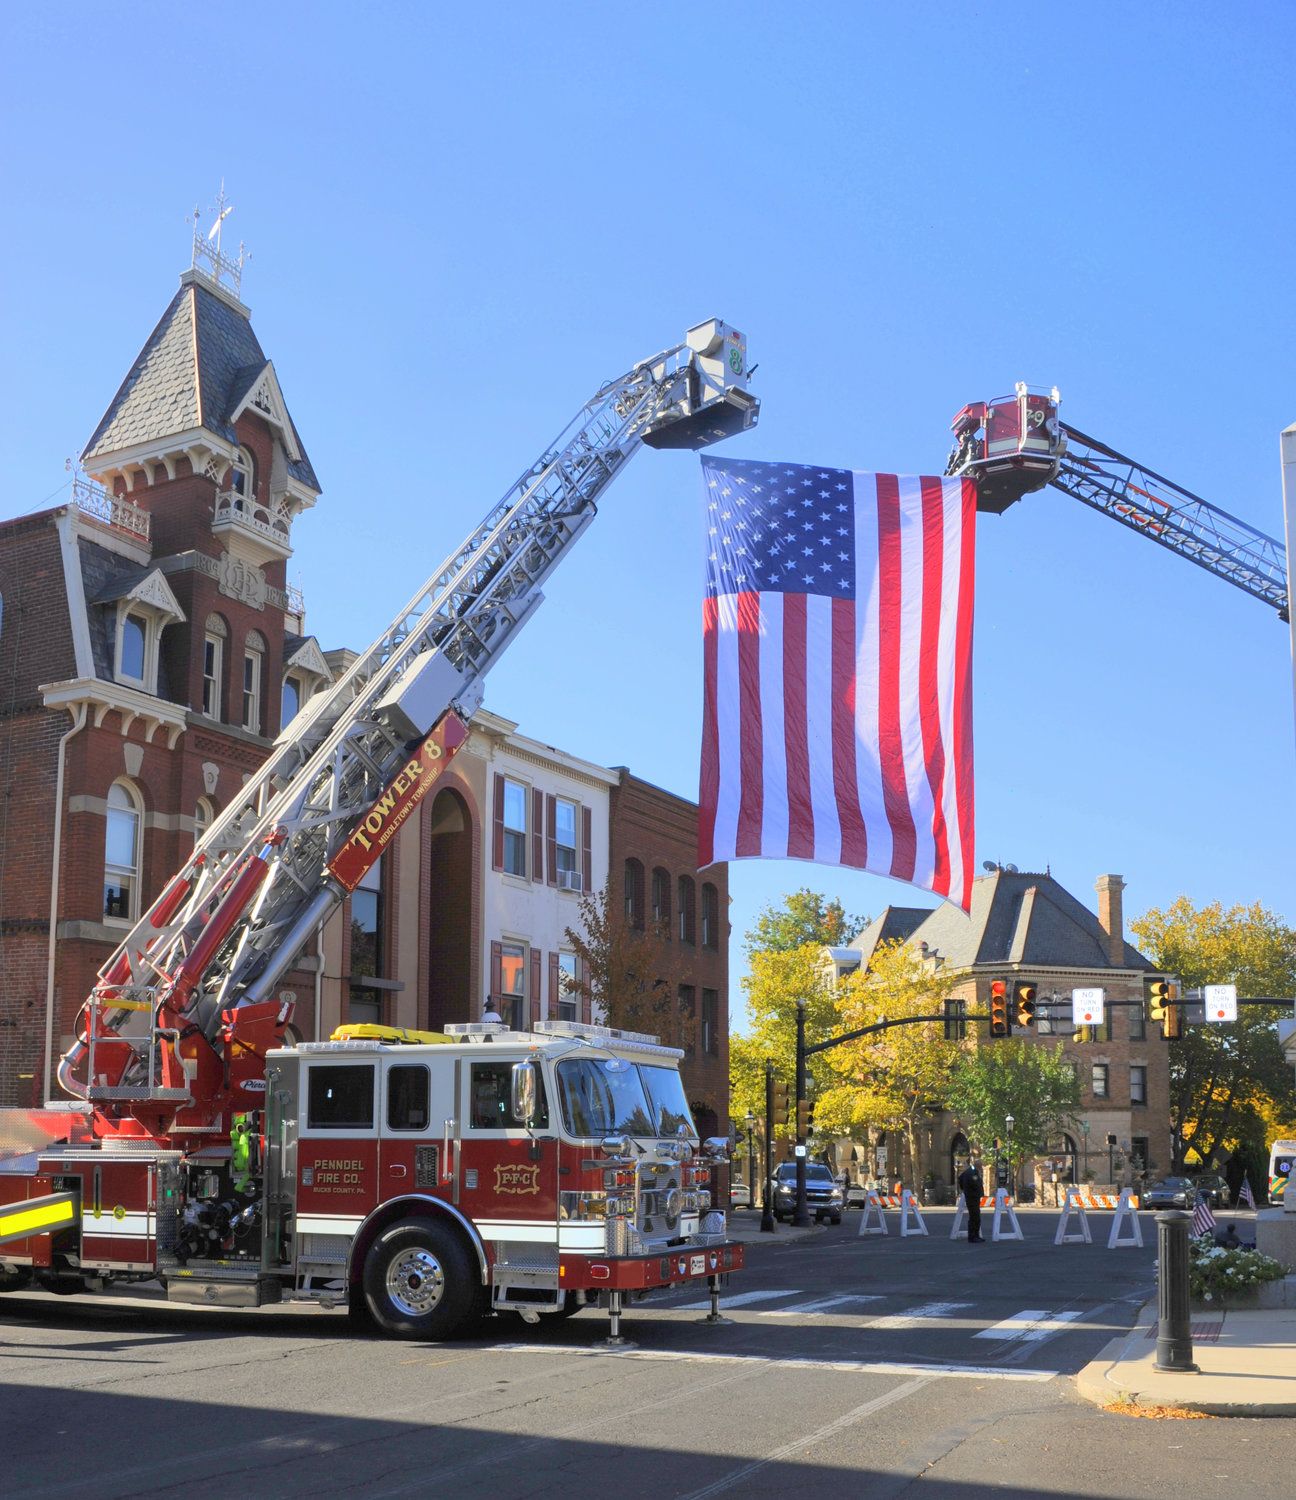 An American flag hangs over Court Street.